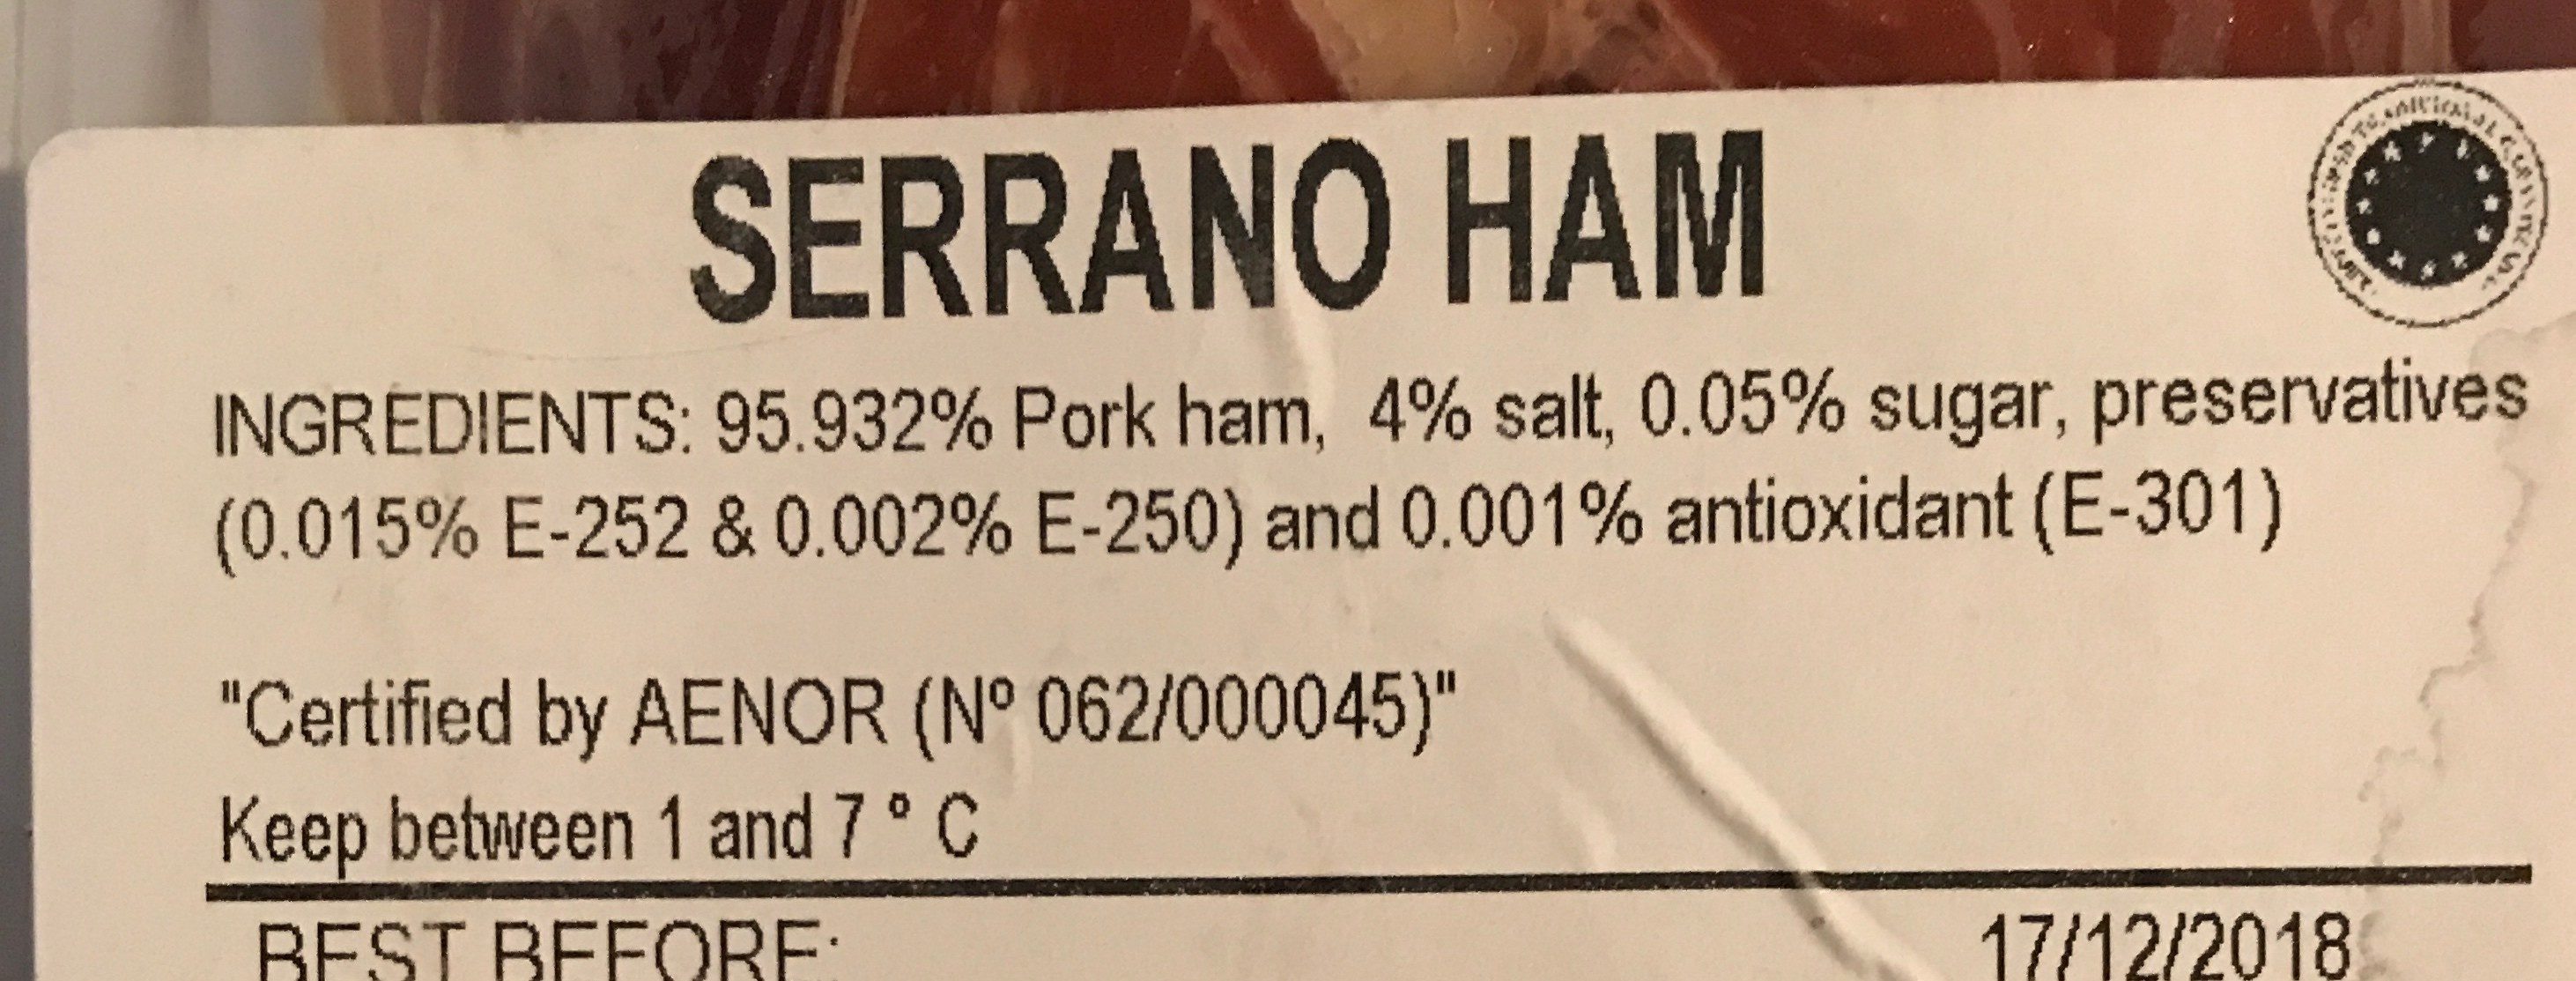 Serrano ham slices - Ingredients